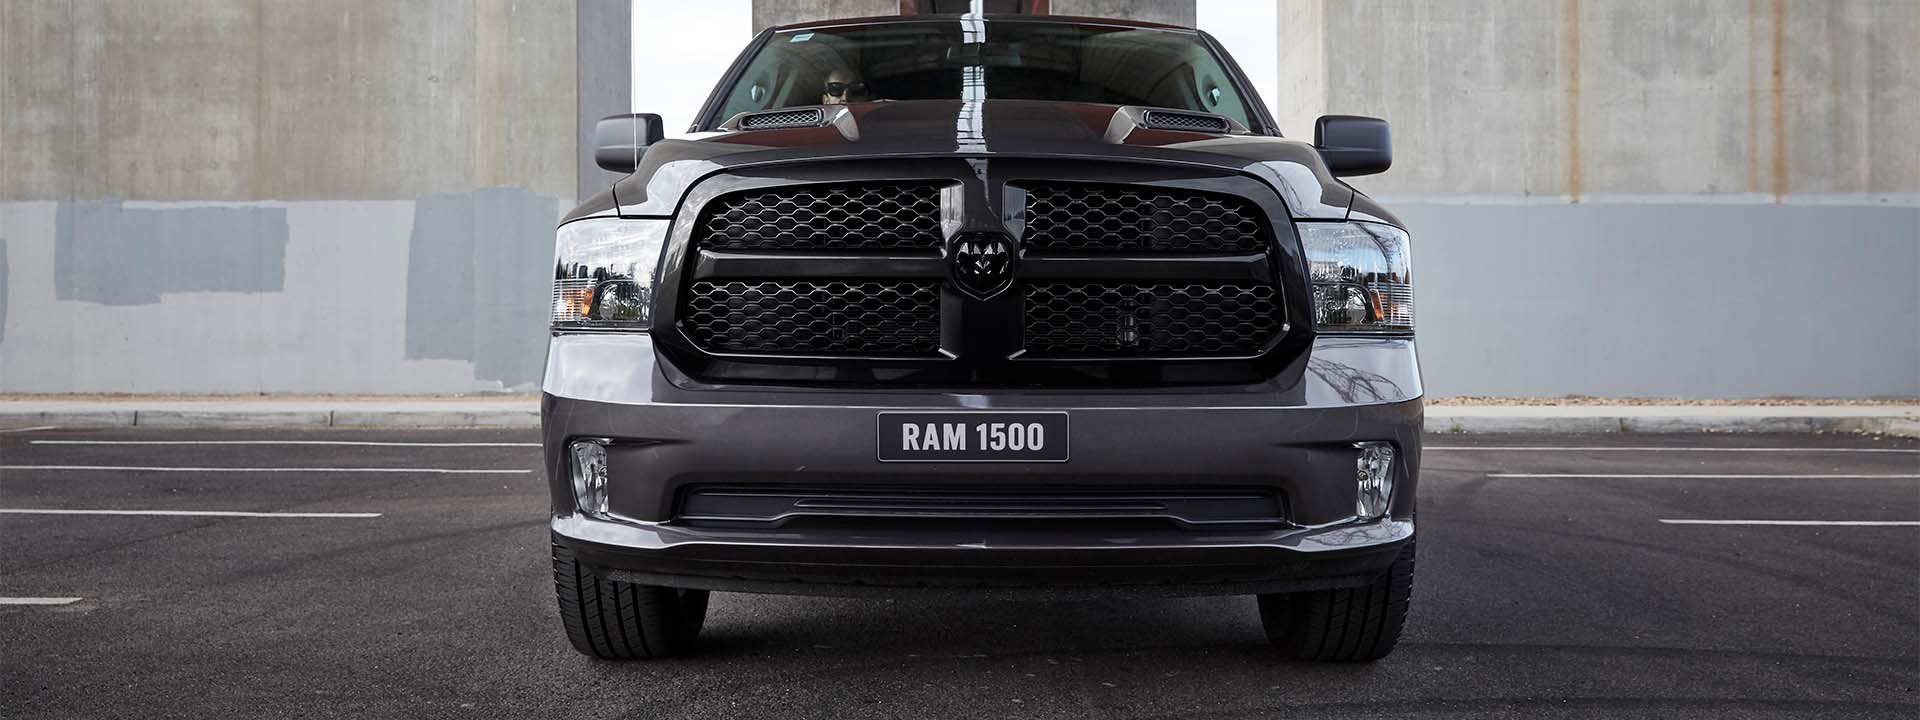 Ram 1500 Express® V8 Hemi® Crew Cab Image